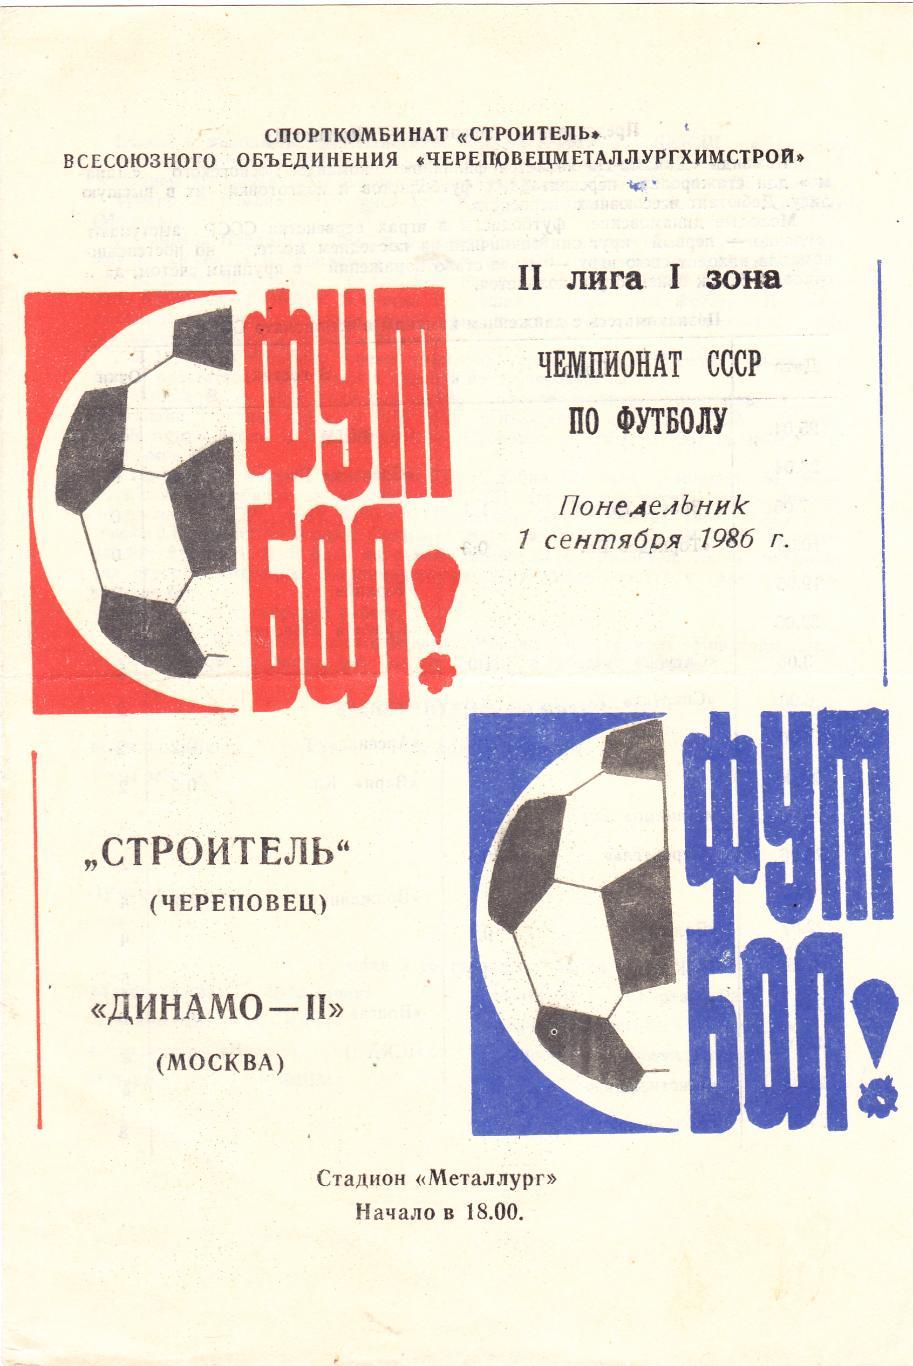 Строитель (Череповец) - Динамо-2 (Москва) 01.09.1986